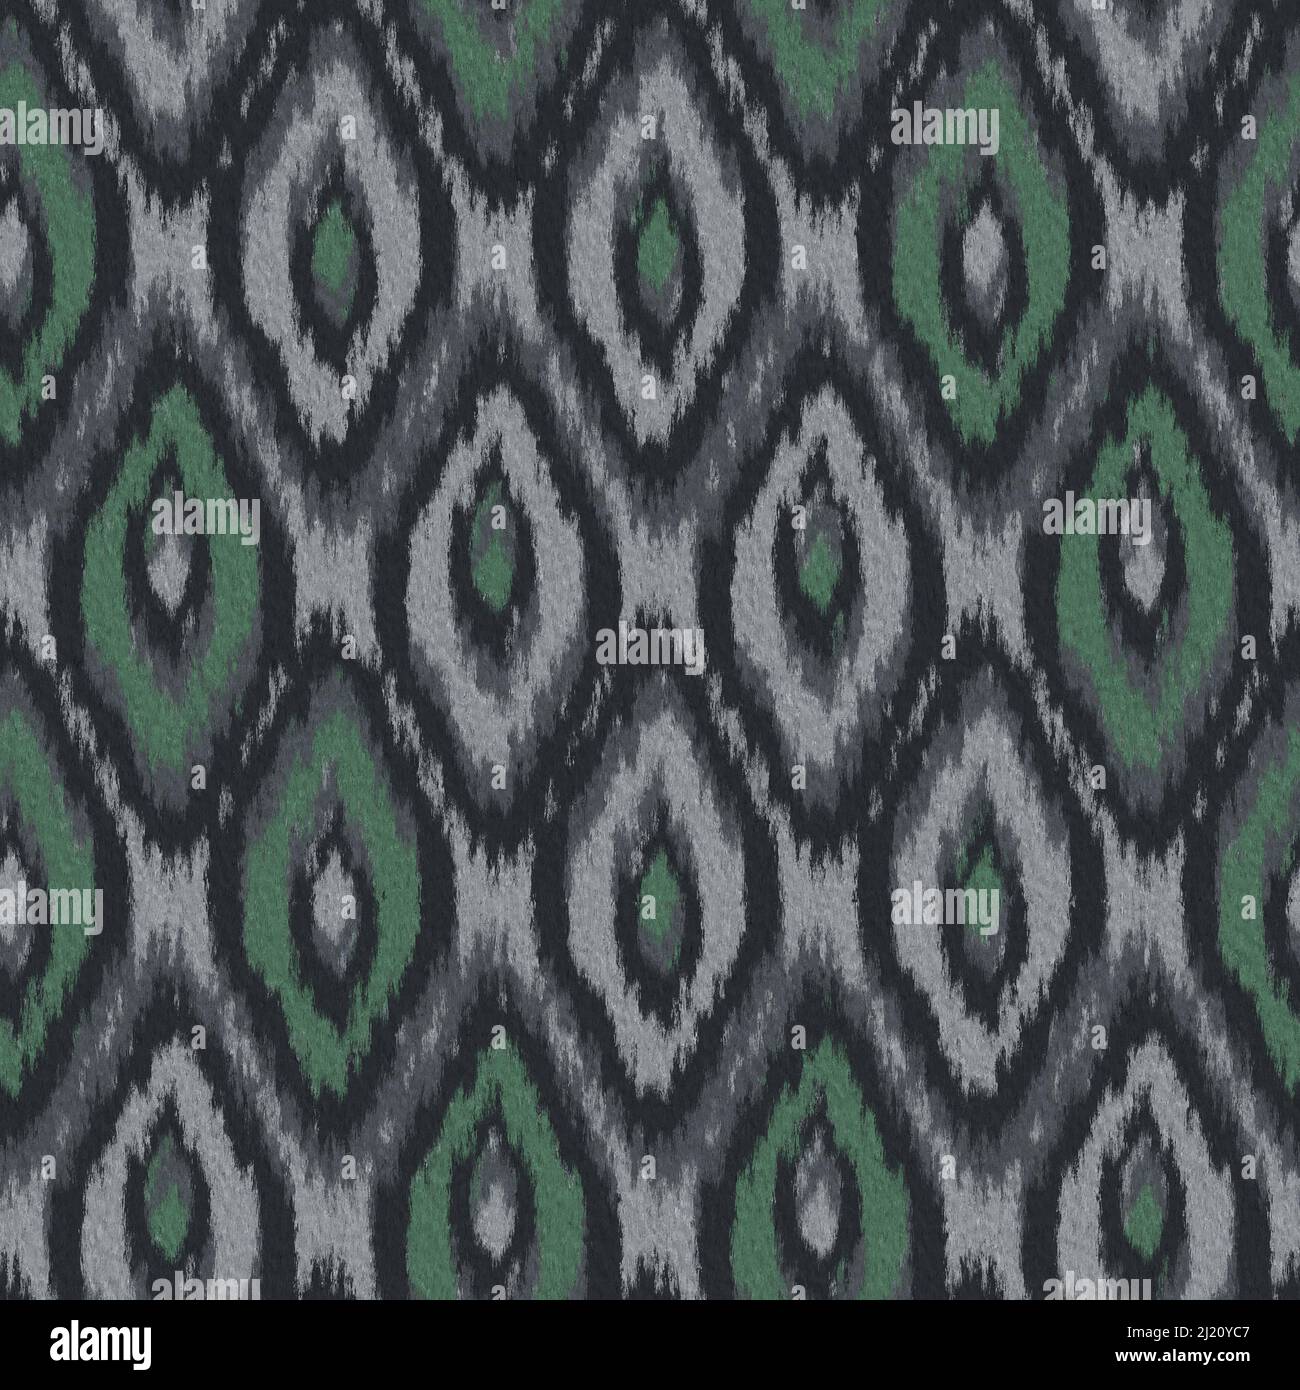 Seamless Ikat- Indian textile Multicolour Pattern designs Stock Photo